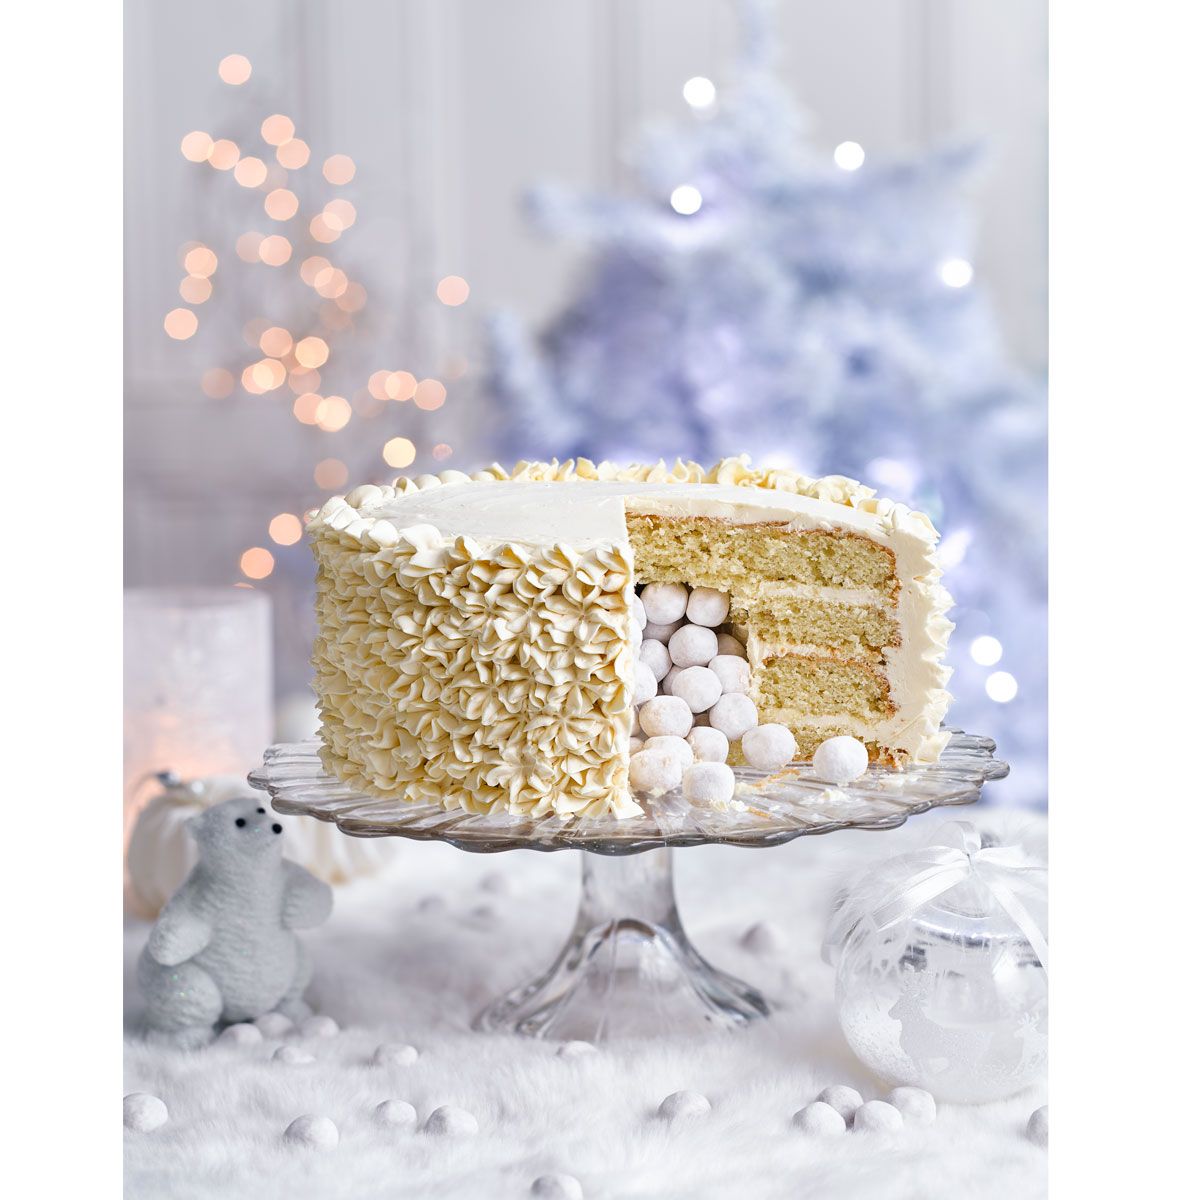 Snowball Cake 2 recipe